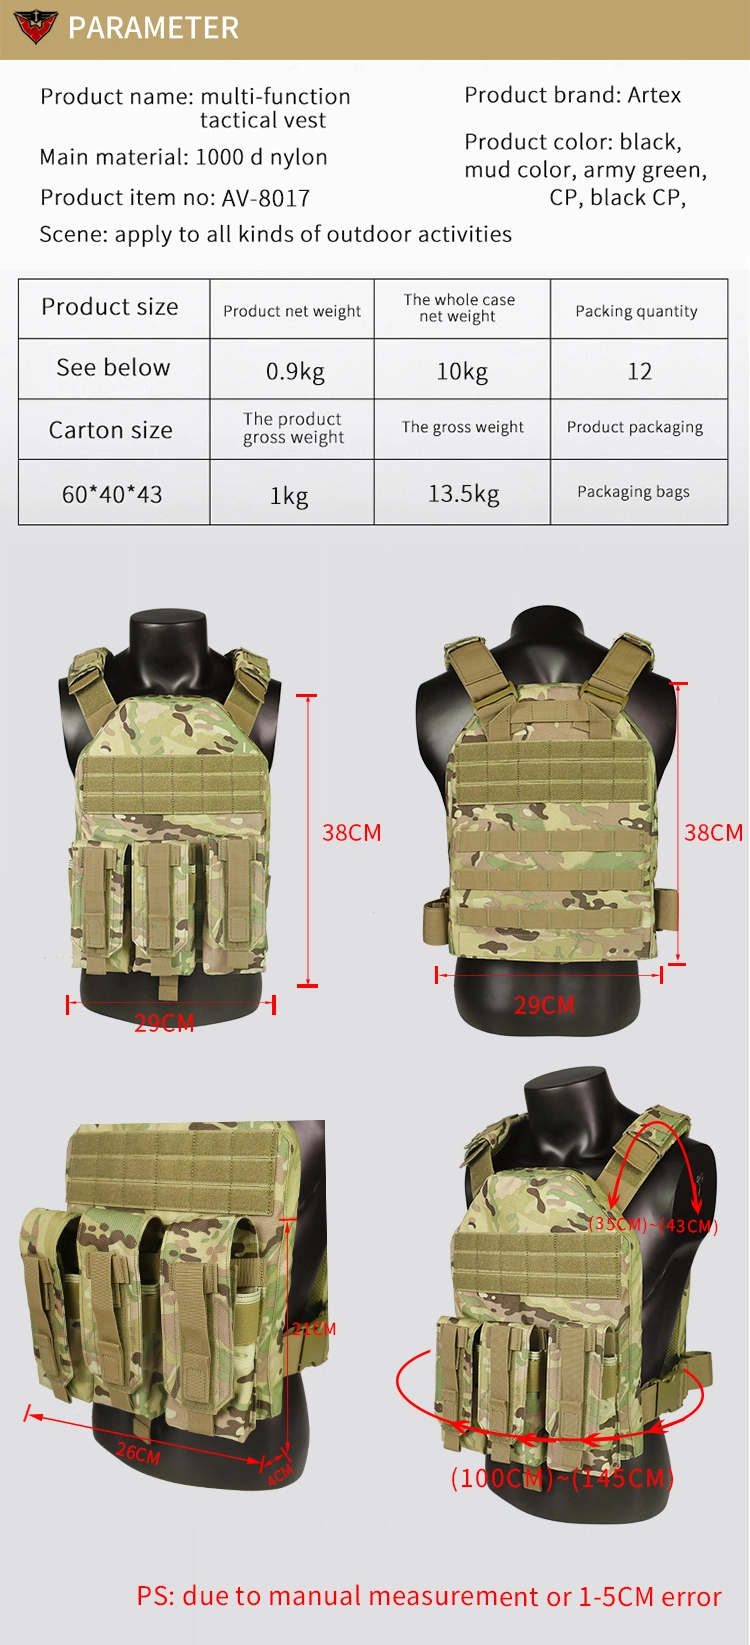 Jpc Tactical Vest Lightweight Training Molle Outdoor Combat Plate Carrier Huting Tactical Vest